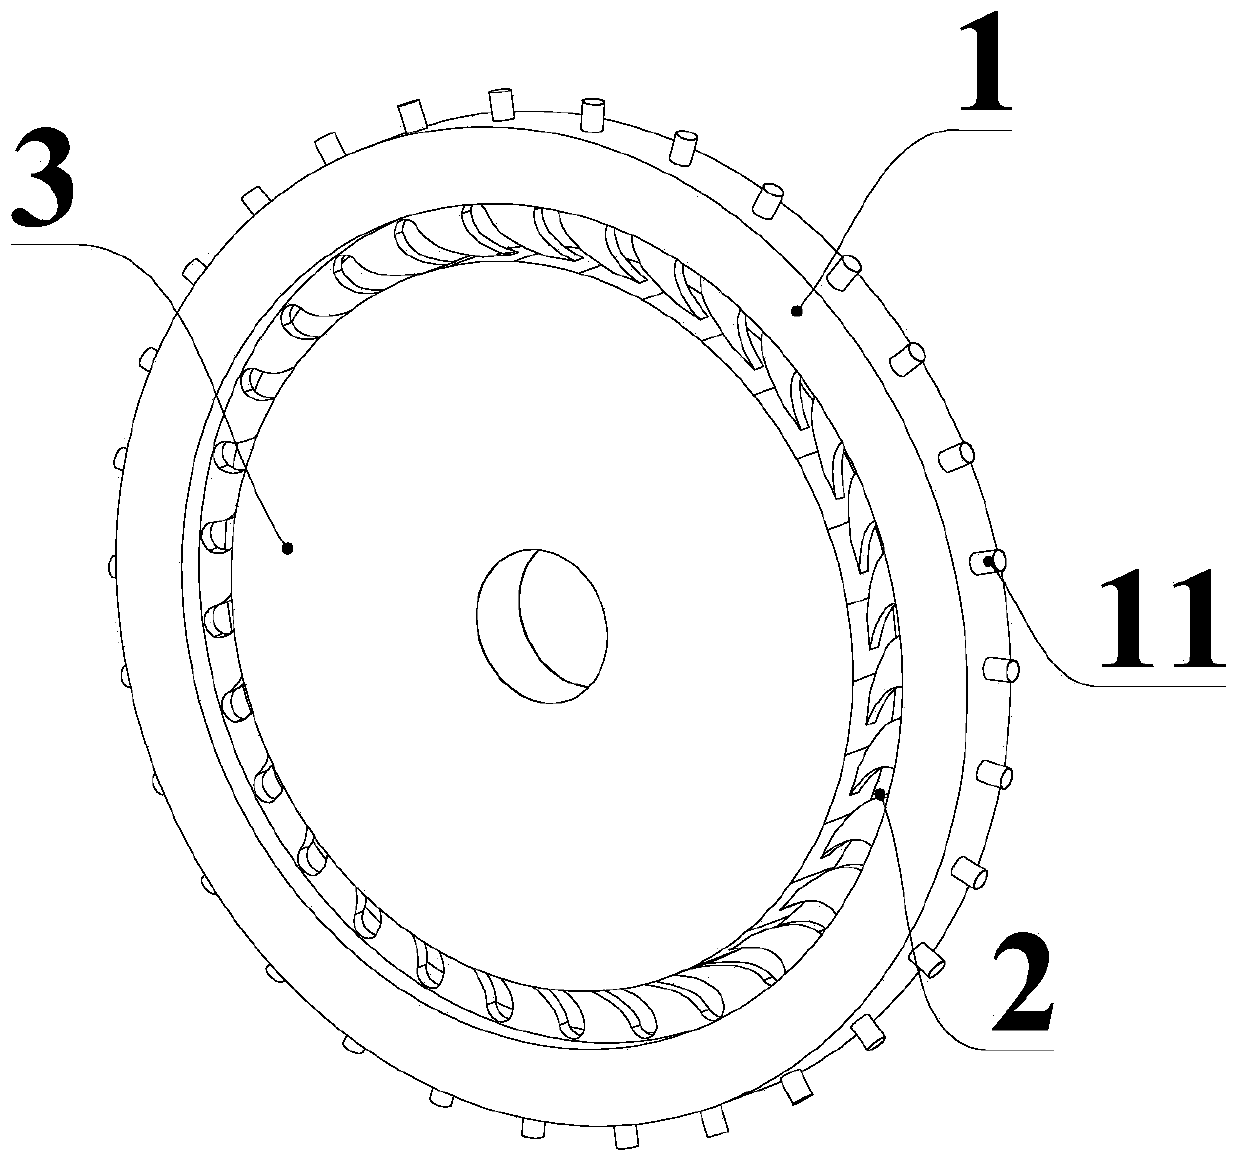 Compressor vortex reducing structure with cascade type de-rotation nozzles